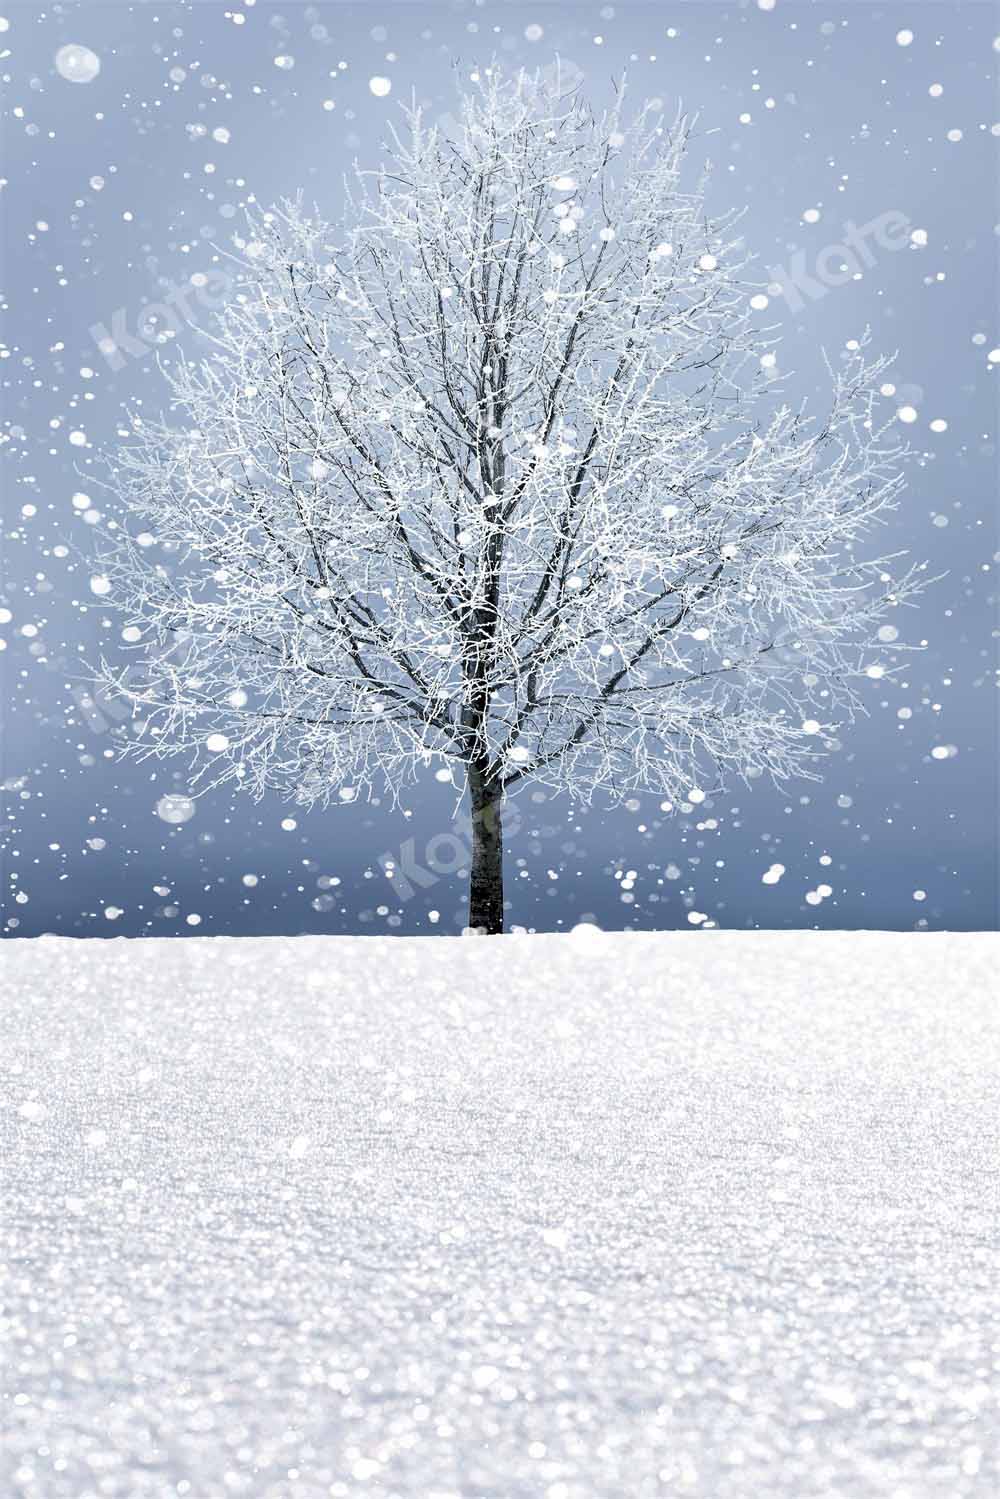 kate冬の雪に覆われた大きな木のモザイクの背景 Chain設計